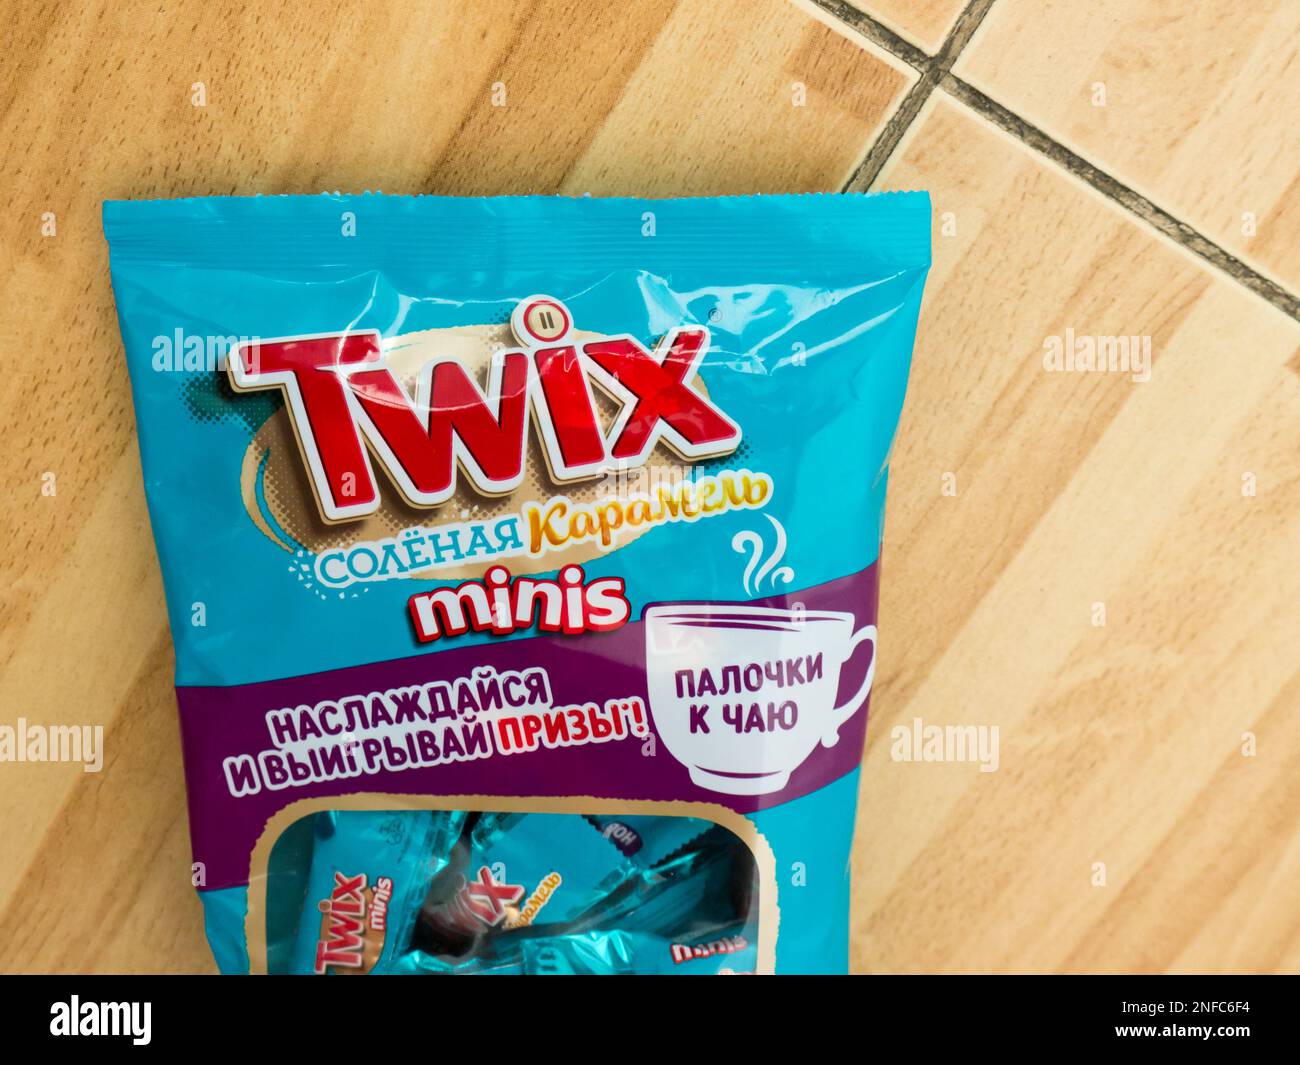 Twix minis cookie bars. Twix is a chocolate bar made by Mars, Inc. Stock Photo